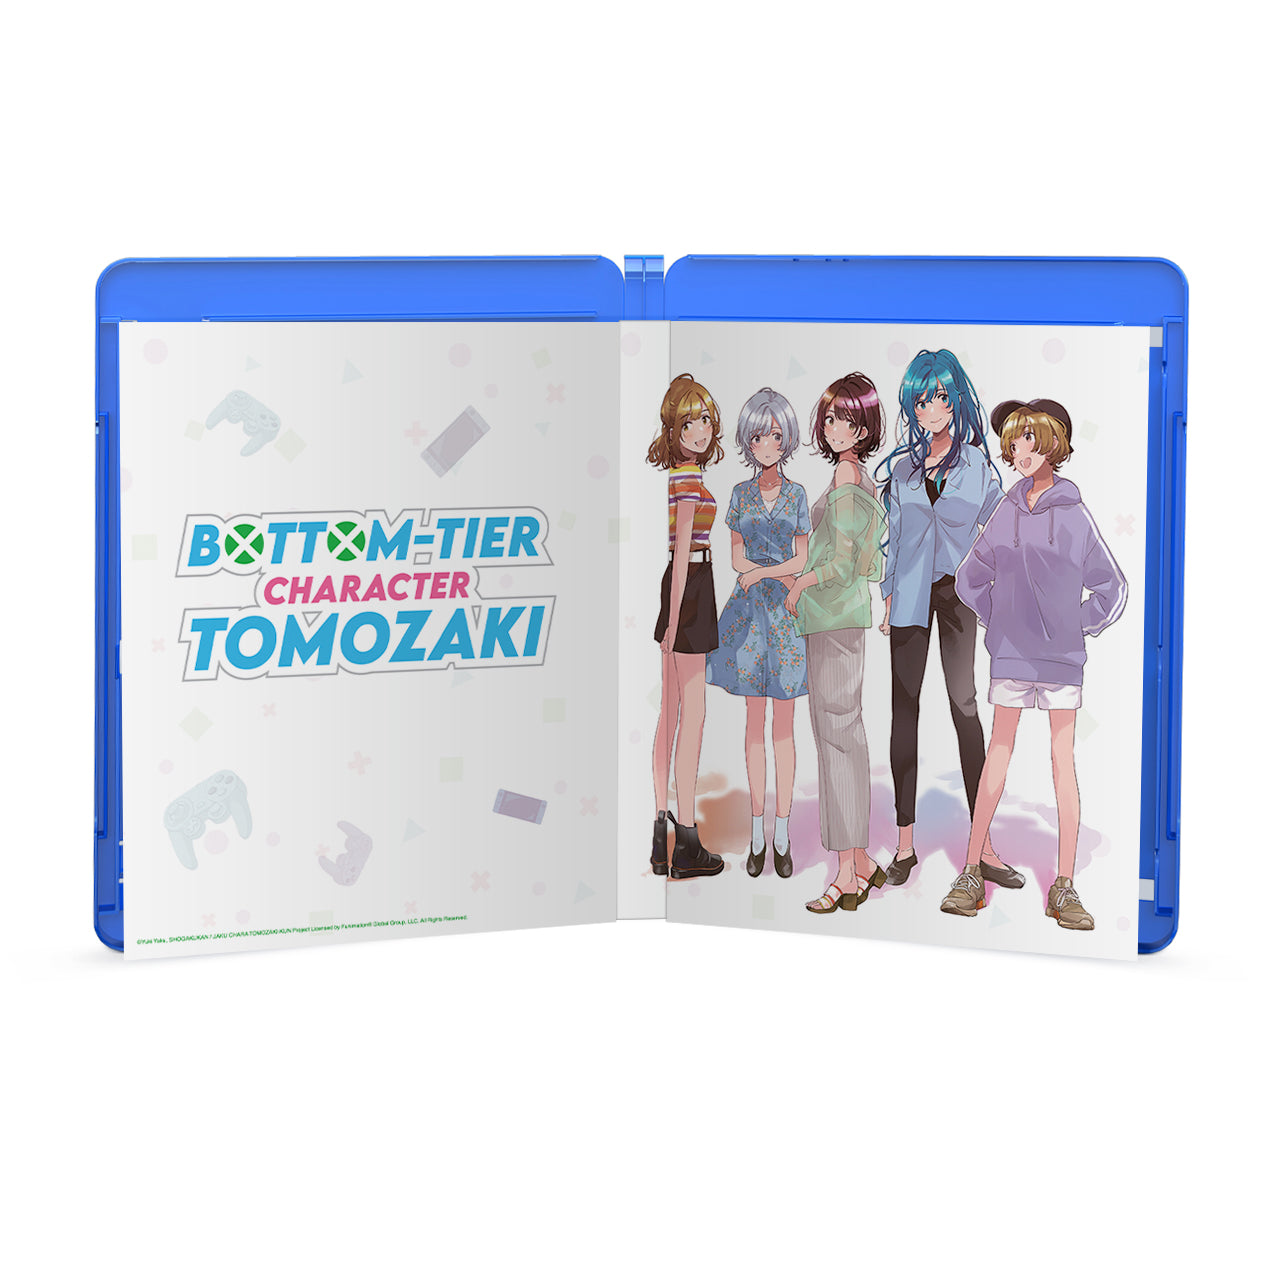 Bottom-Tier Character Tomozaki - The Complete Season - Blu-ray image count 4